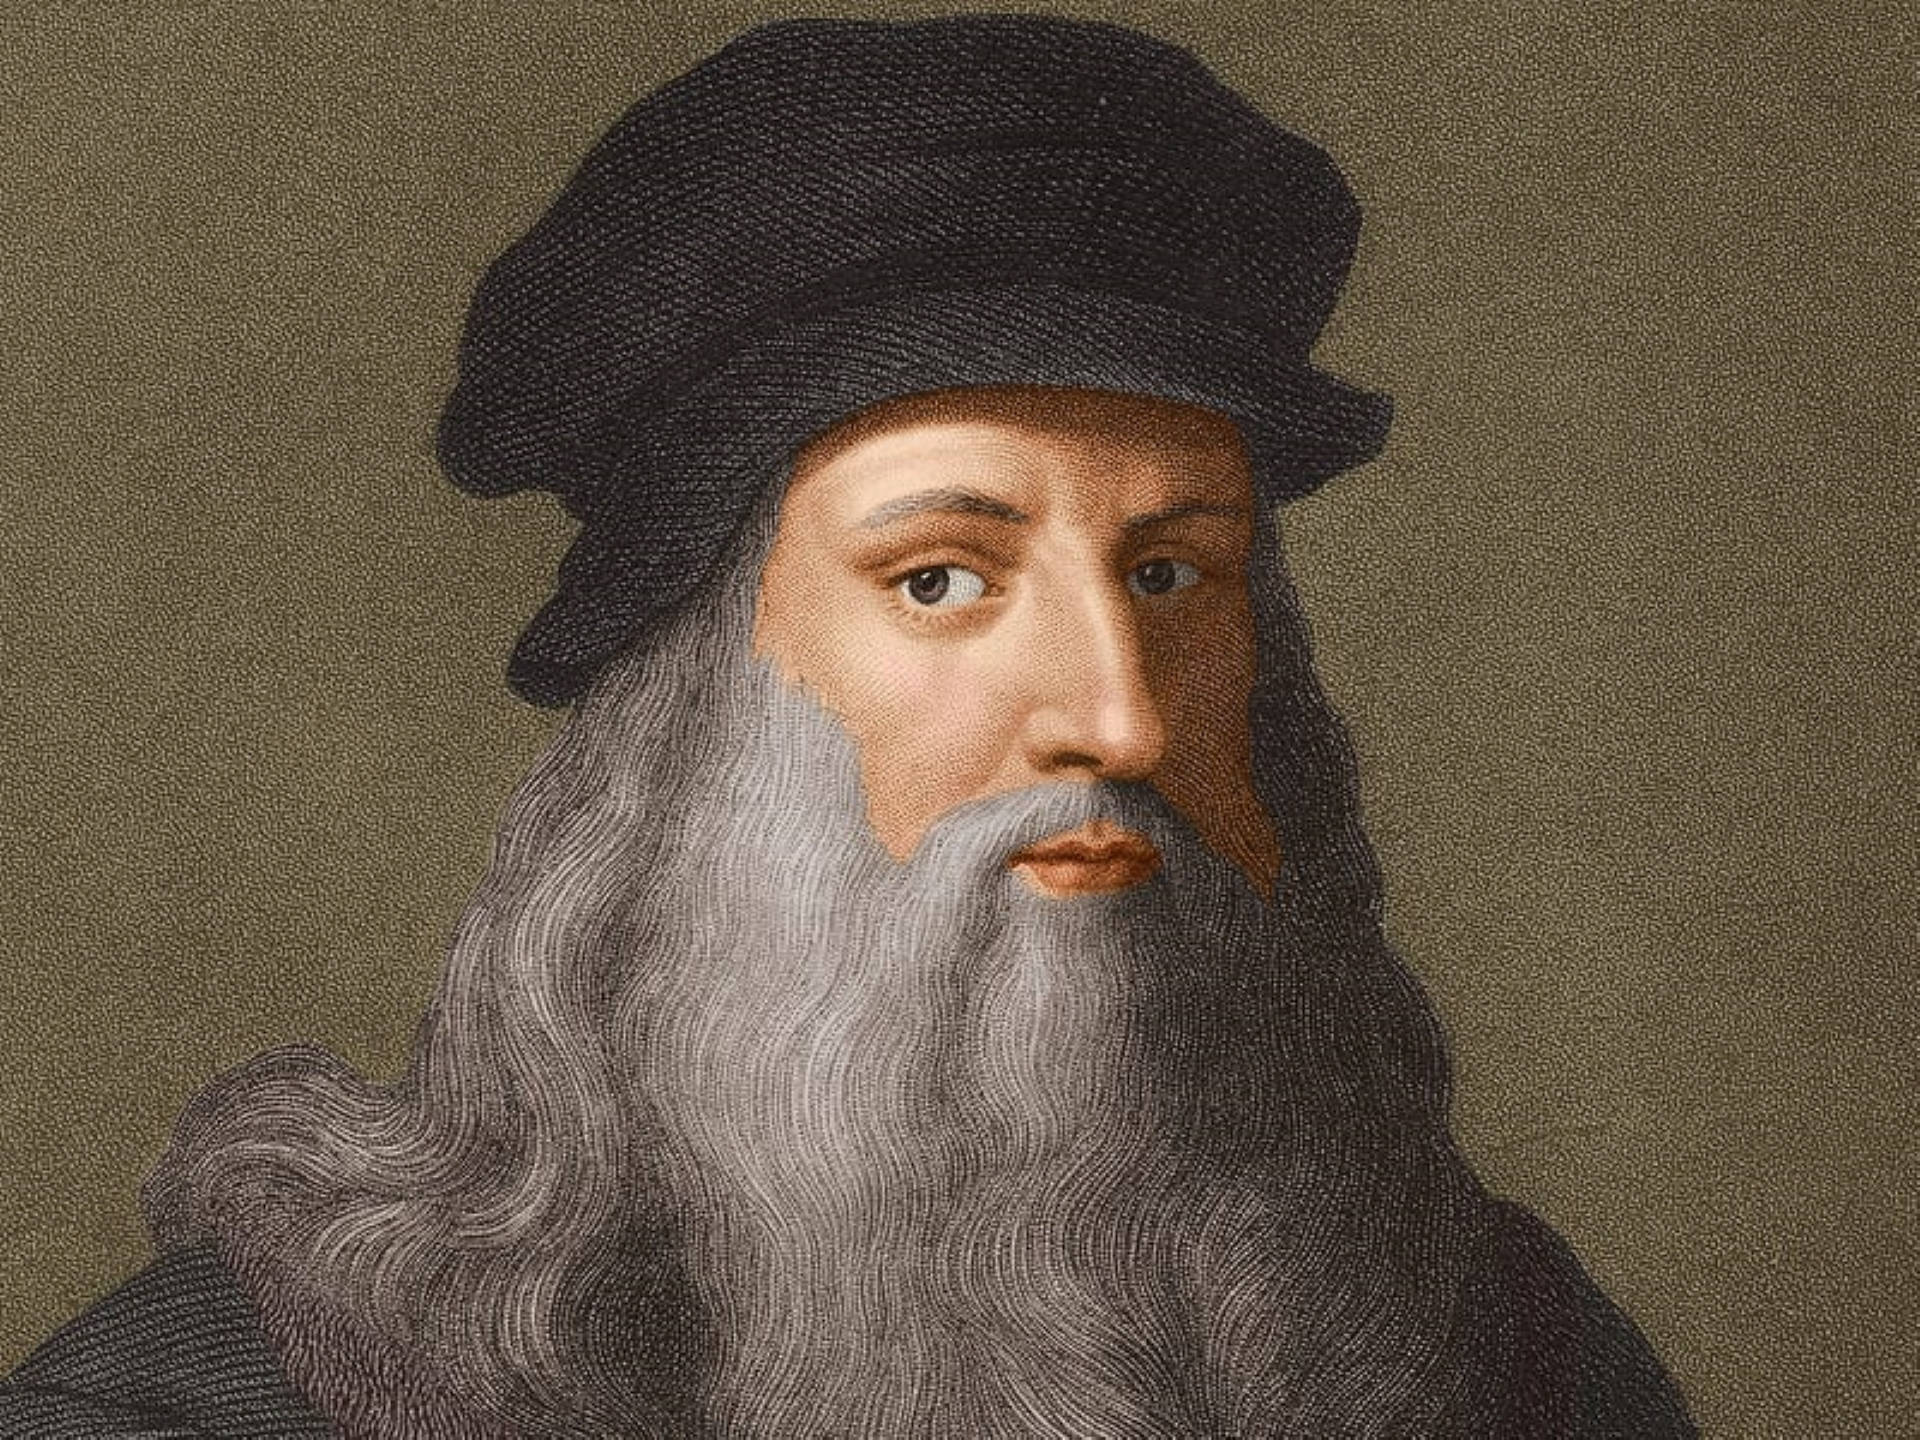 Free Leonardo Da Vinci Wallpaper Downloads, [100+] Leonardo Da Vinci  Wallpapers for FREE 